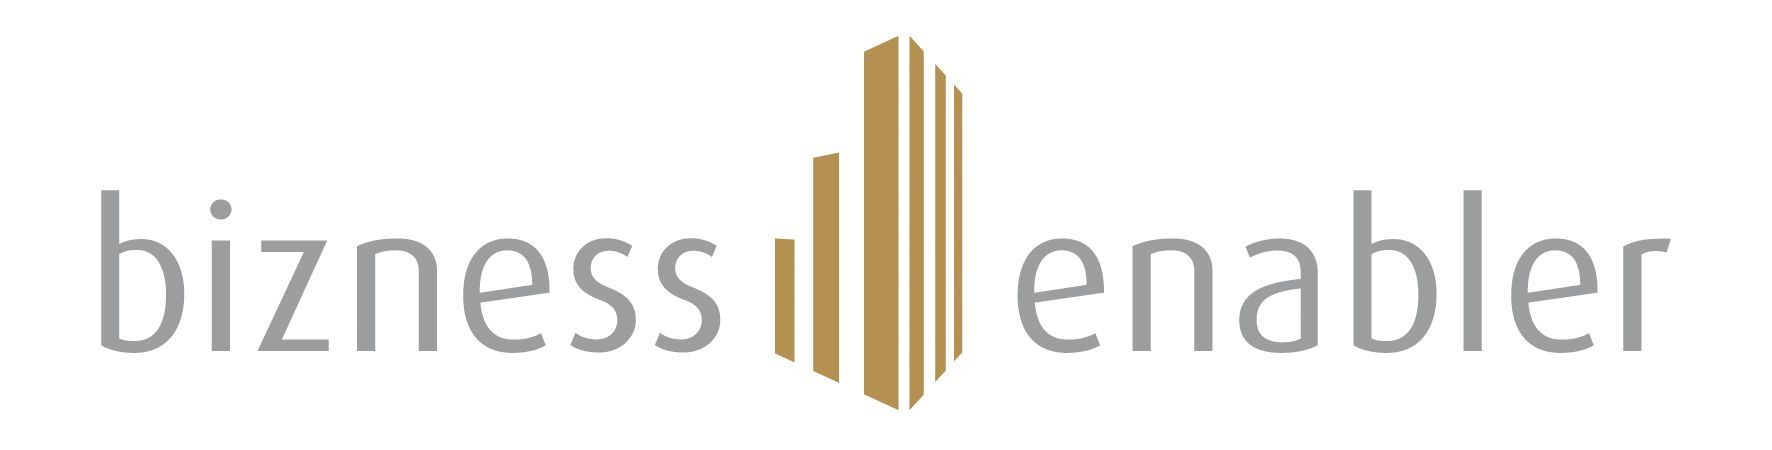 bizness enabler GmbH